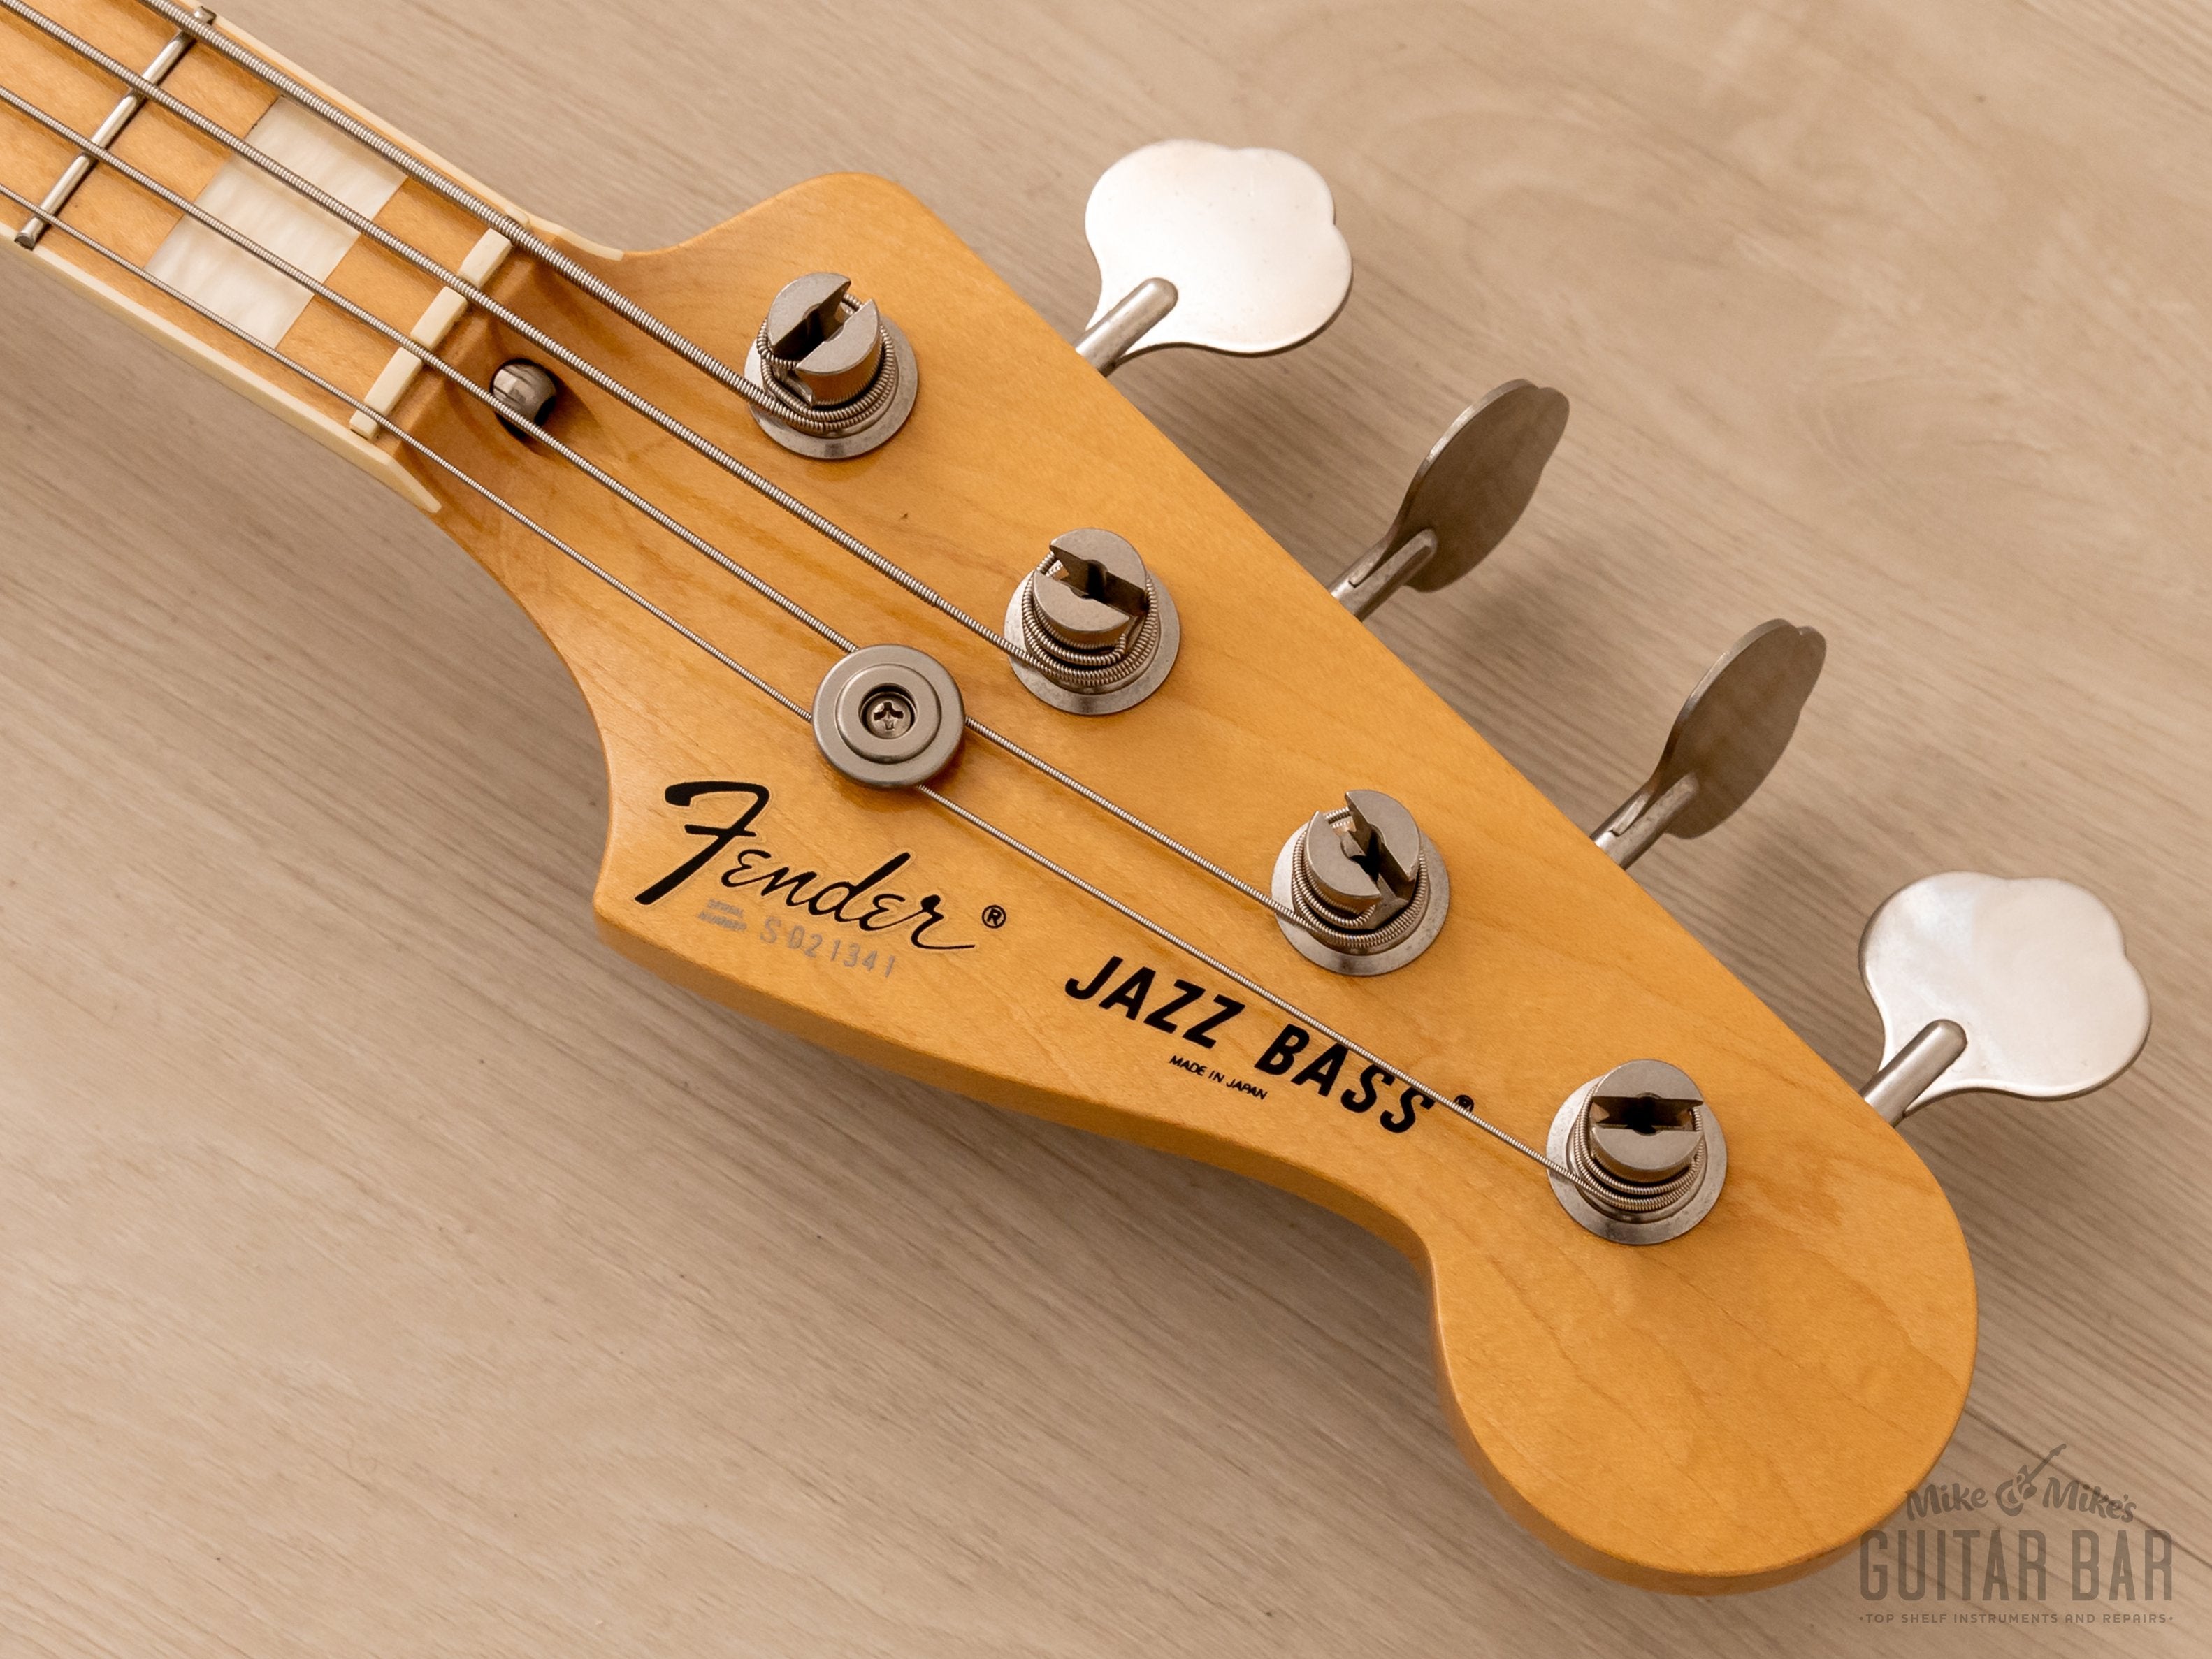 2008 Fender Jazz Bass ‘75 Vintage Reissue JB75-100US Natural Ash w/ USA Pickups, Case & Hangtags, Japan CIJ